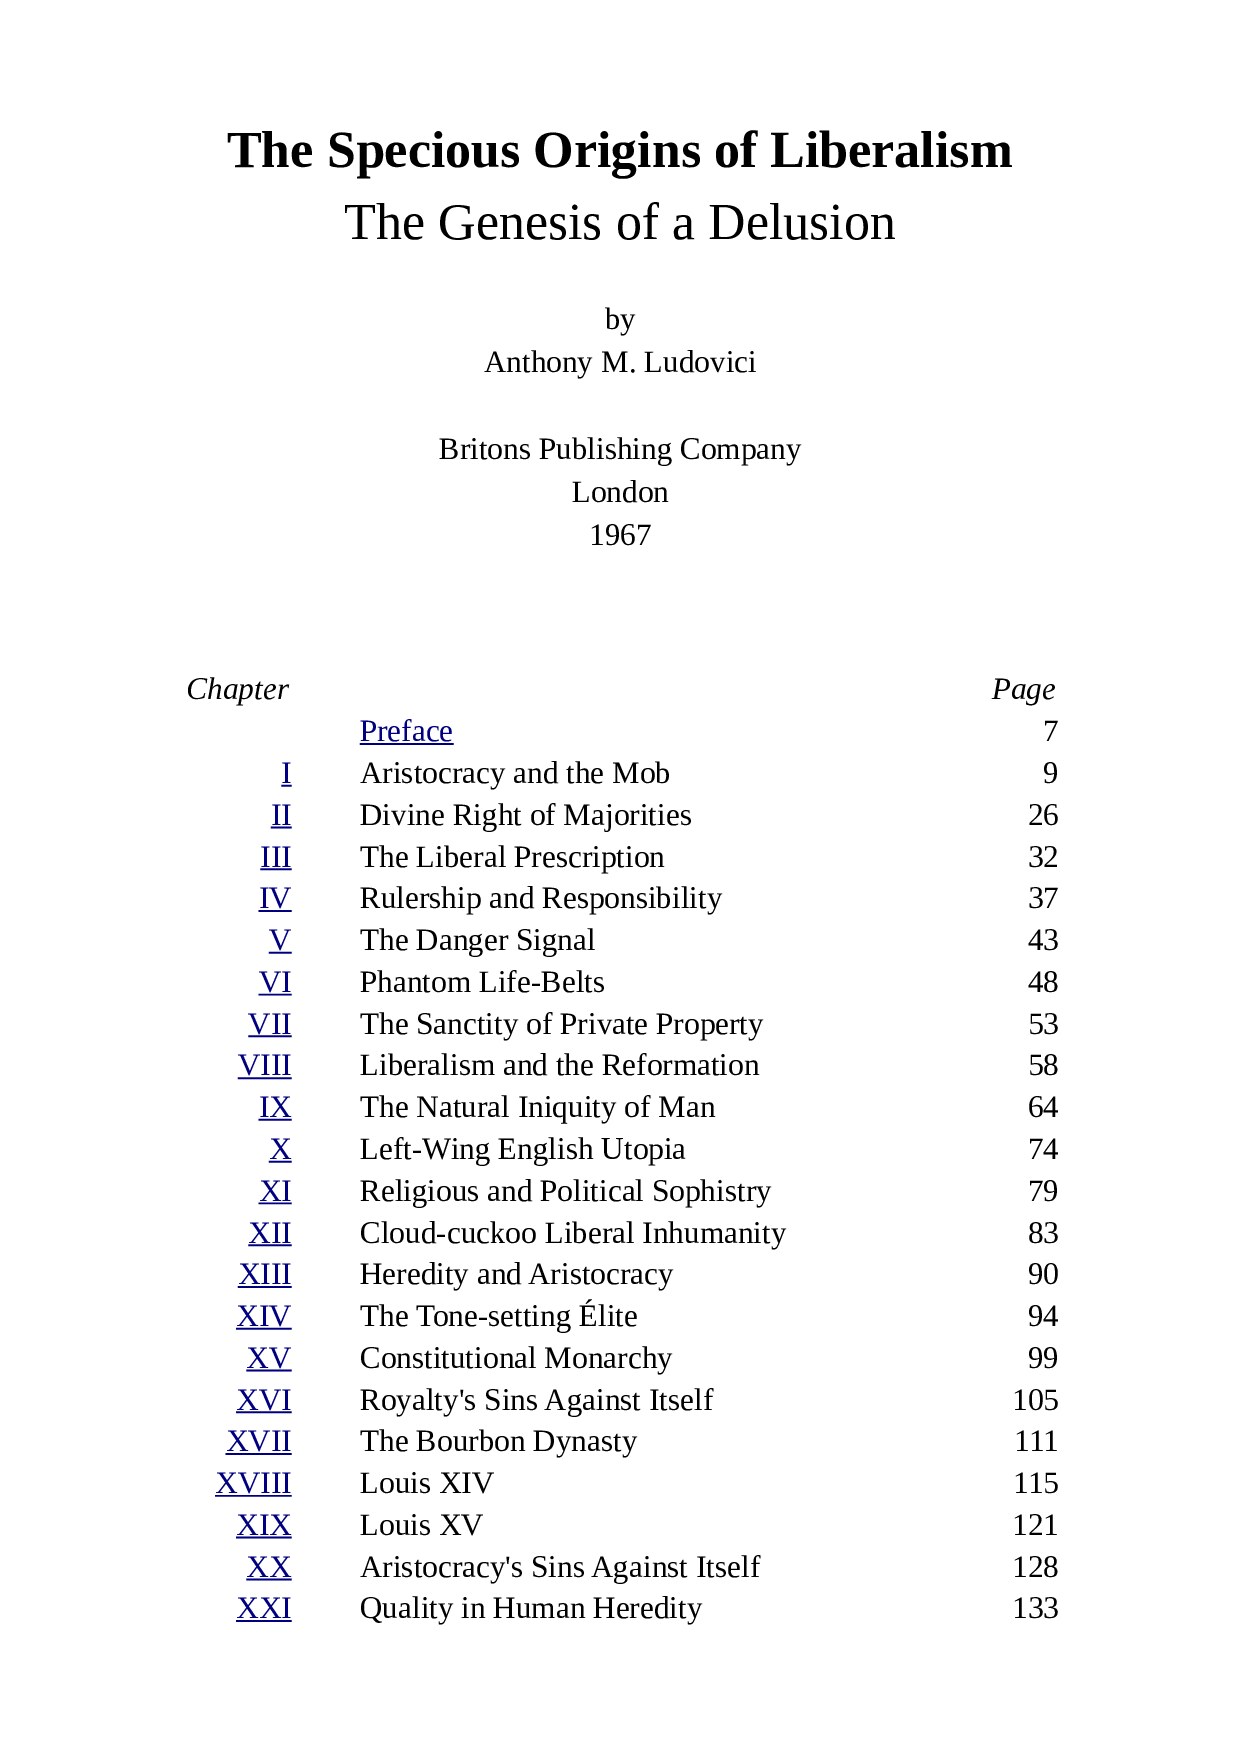 Ludovici, Anthony Mario; The Specious Origins of Liberalism